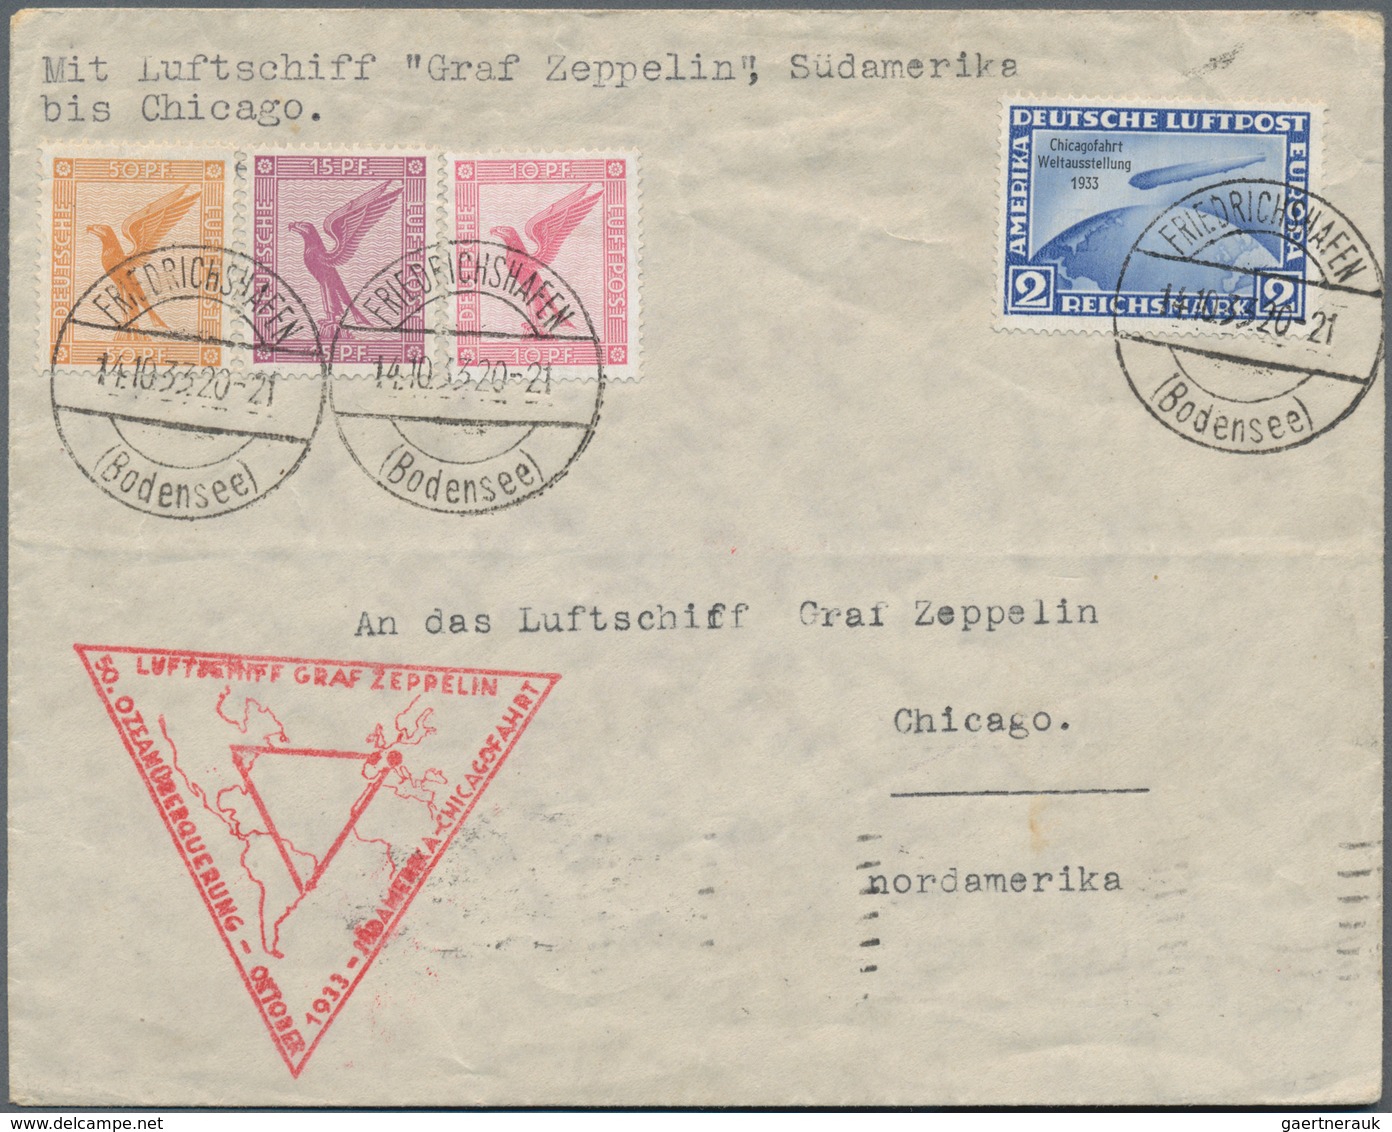 Zeppelinpost Deutschland: 1933. German Cover Flown On The Graf Zeppelin LZ127 Airship's 1933 Chicago - Airmail & Zeppelin